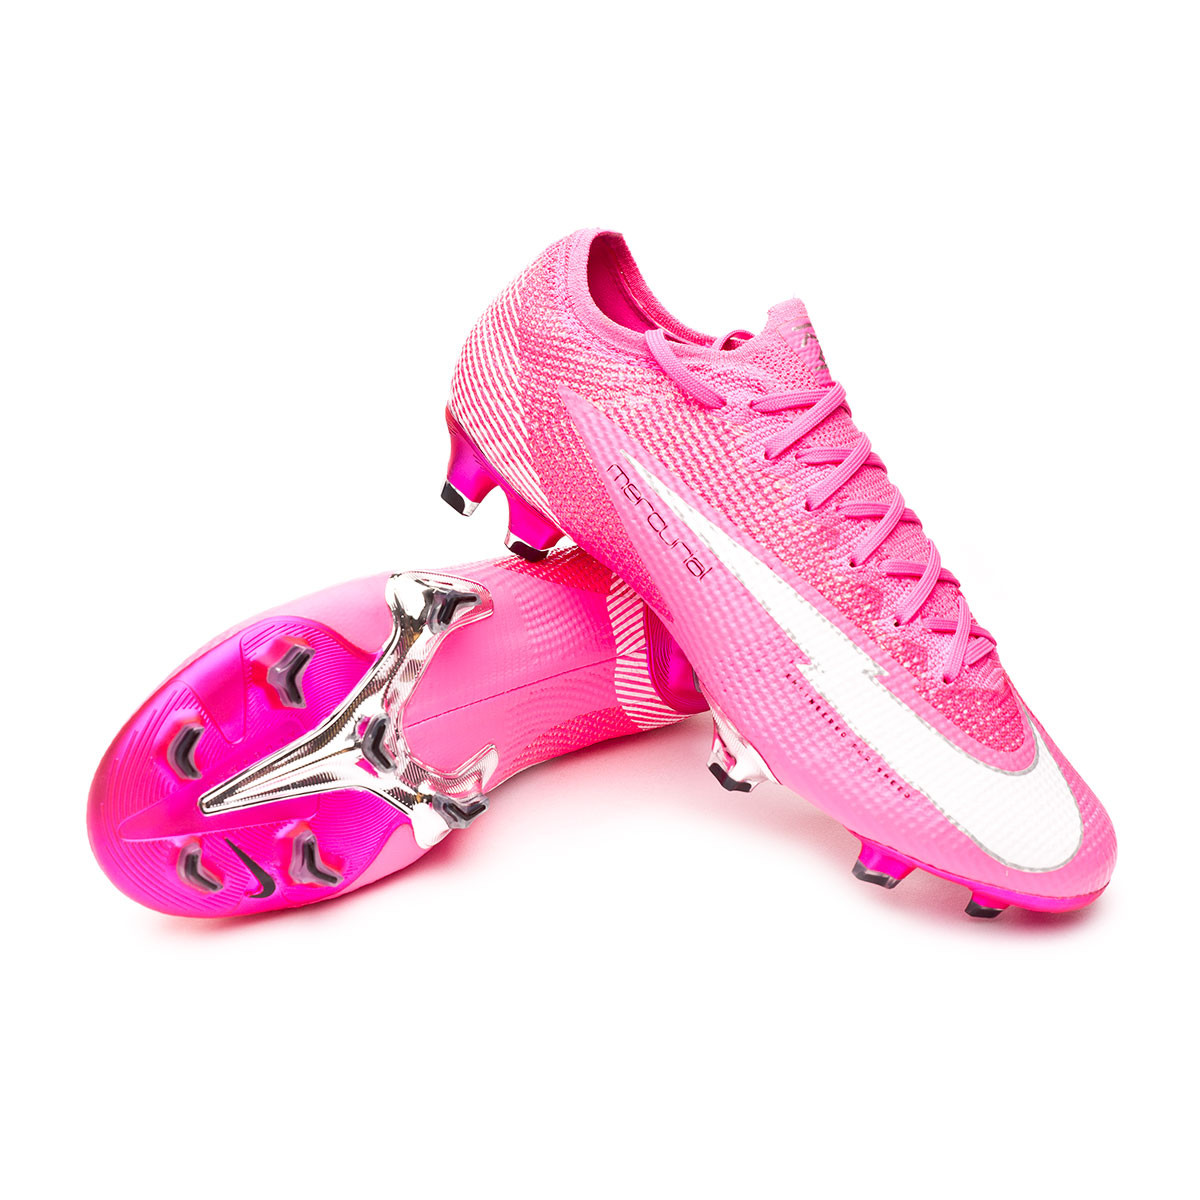 Bota de fútbol Nike Vapor 13 Kylian Mbappé FG Pink - Emotion